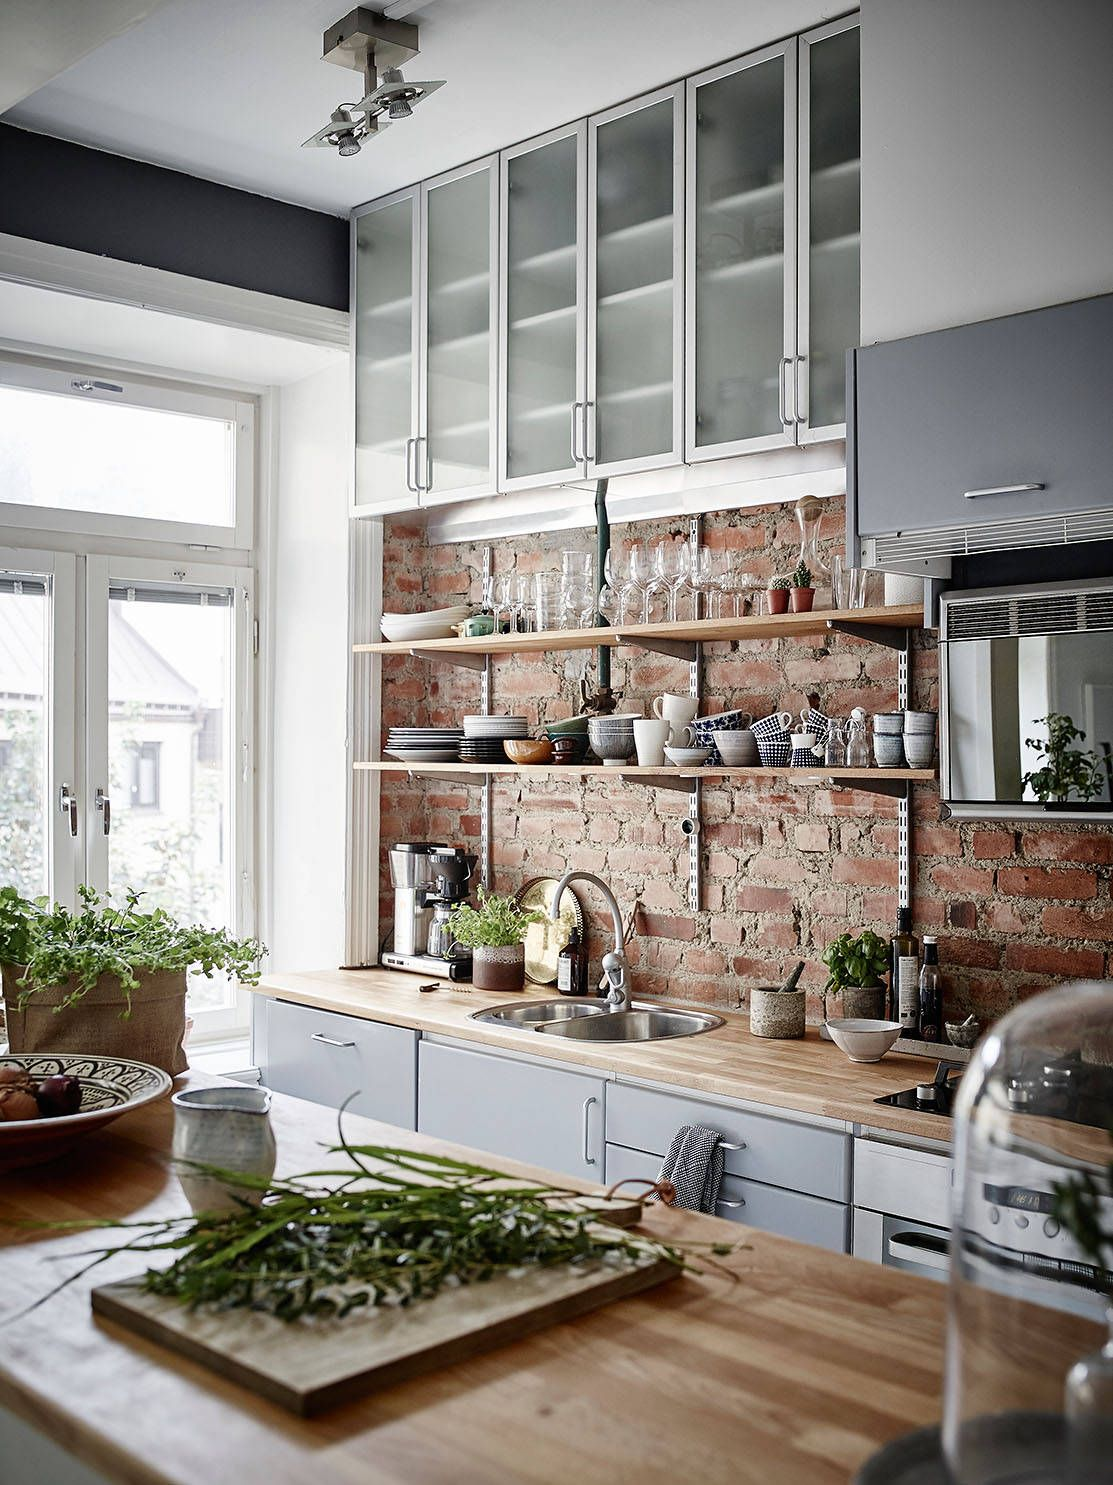 scandinavian kitchen with original brick backsplash, butcher block countertops, a center island for food prep and glass front kitchen cabinets